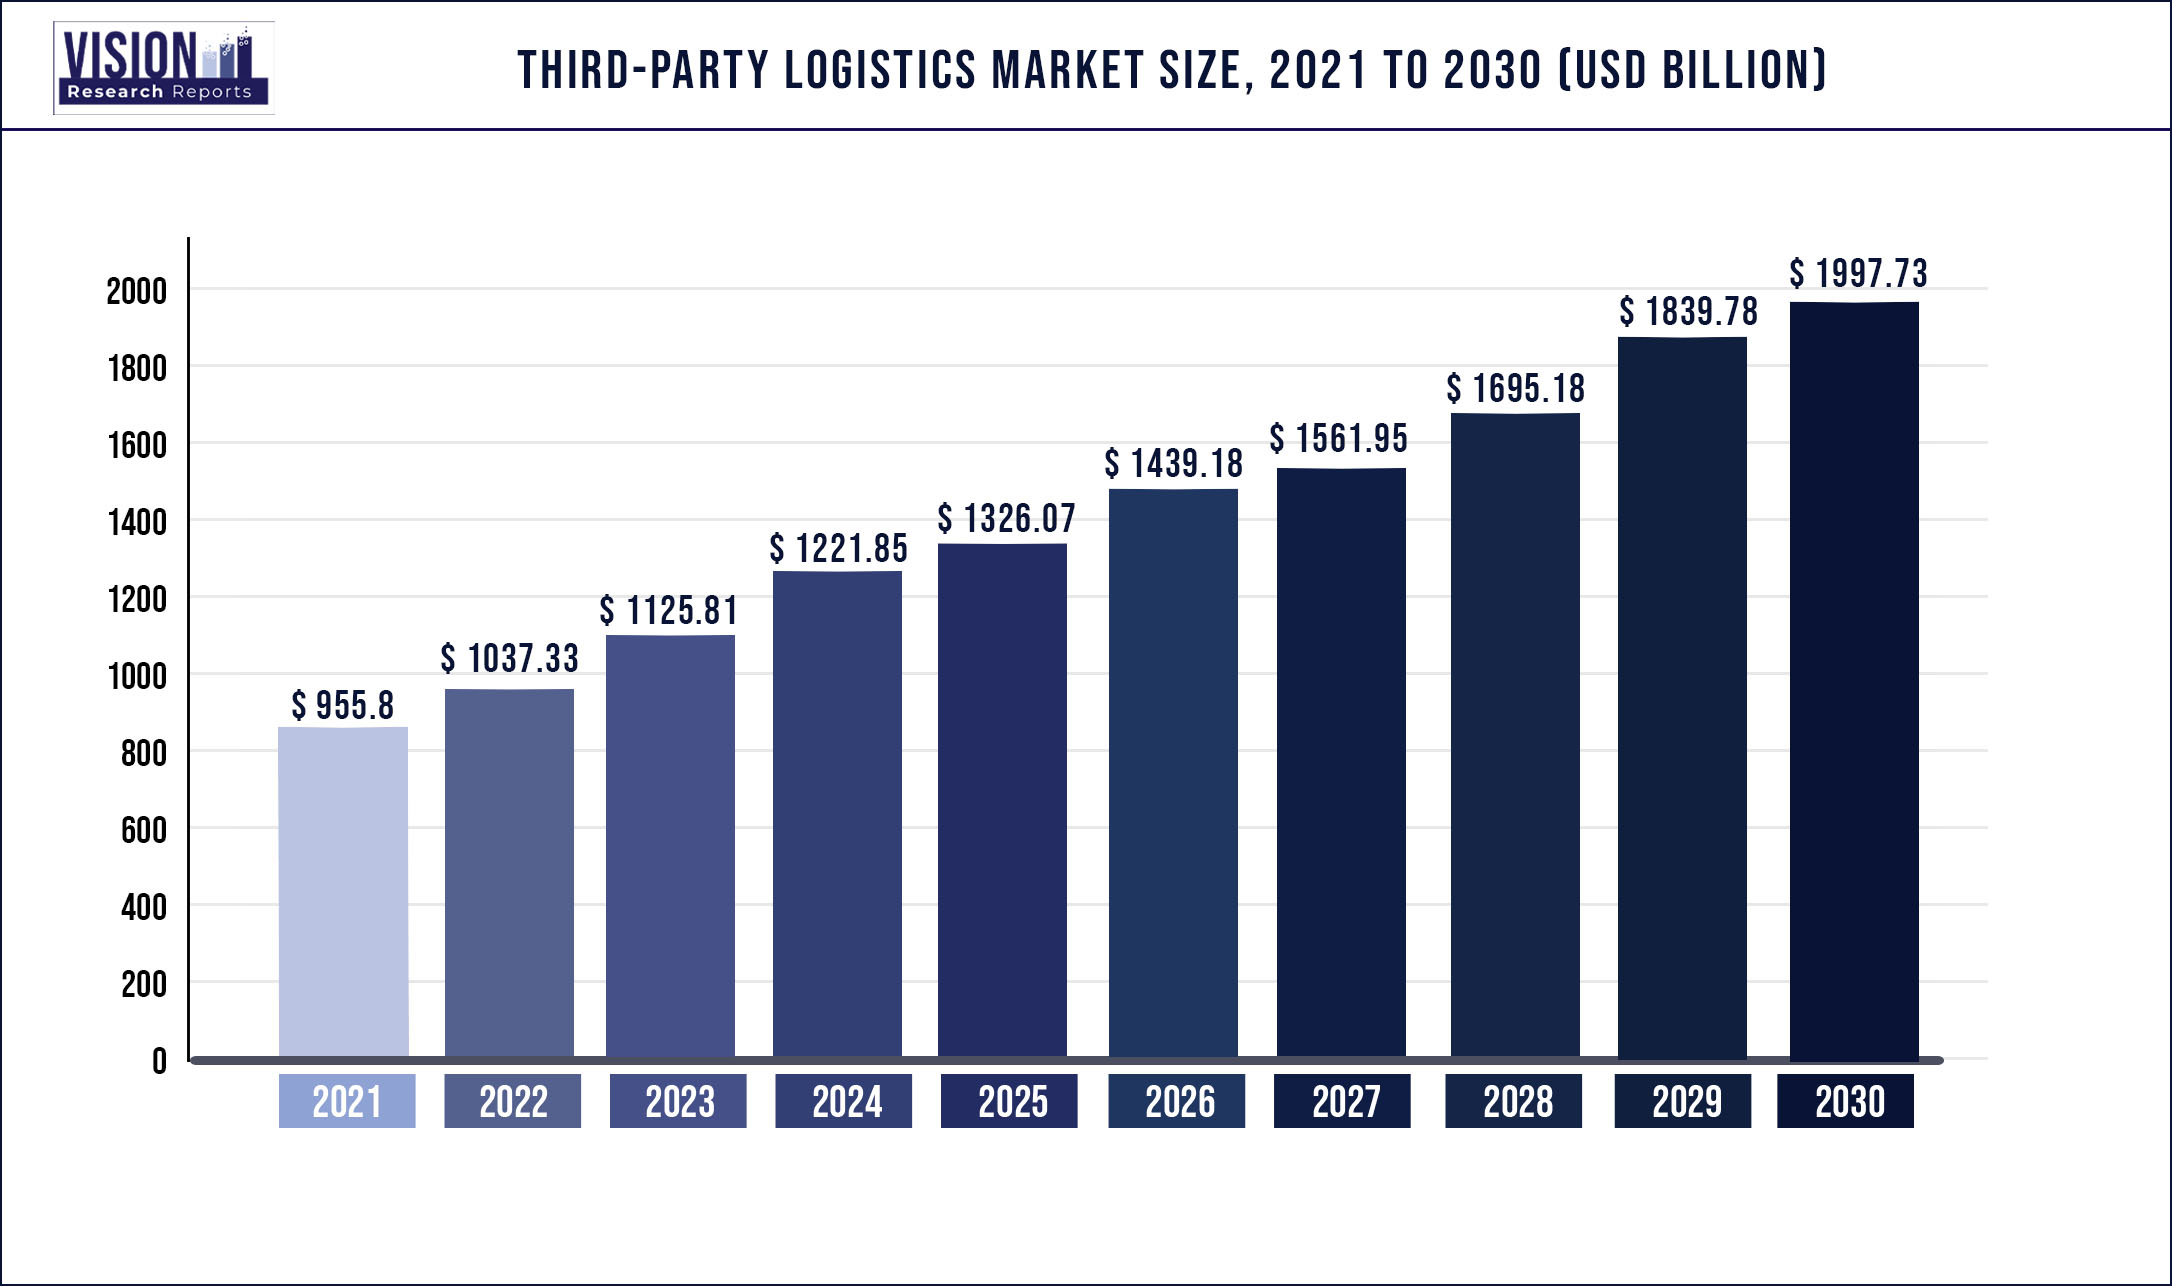 Third-party Logistics Market Size 2021 to 2030